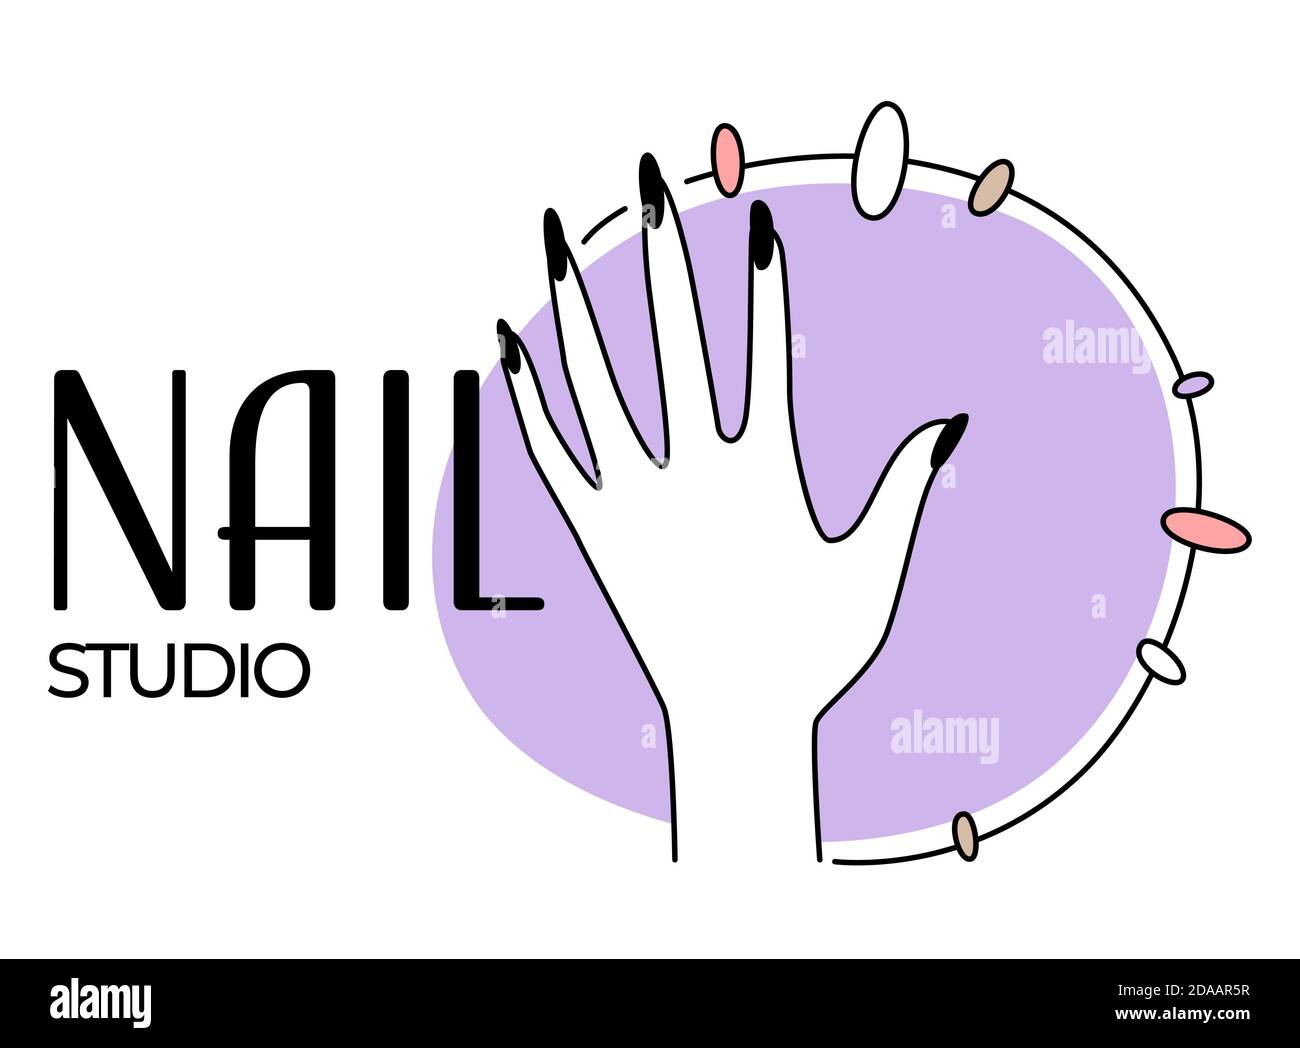 Nail Studio Cyprus - wide 9